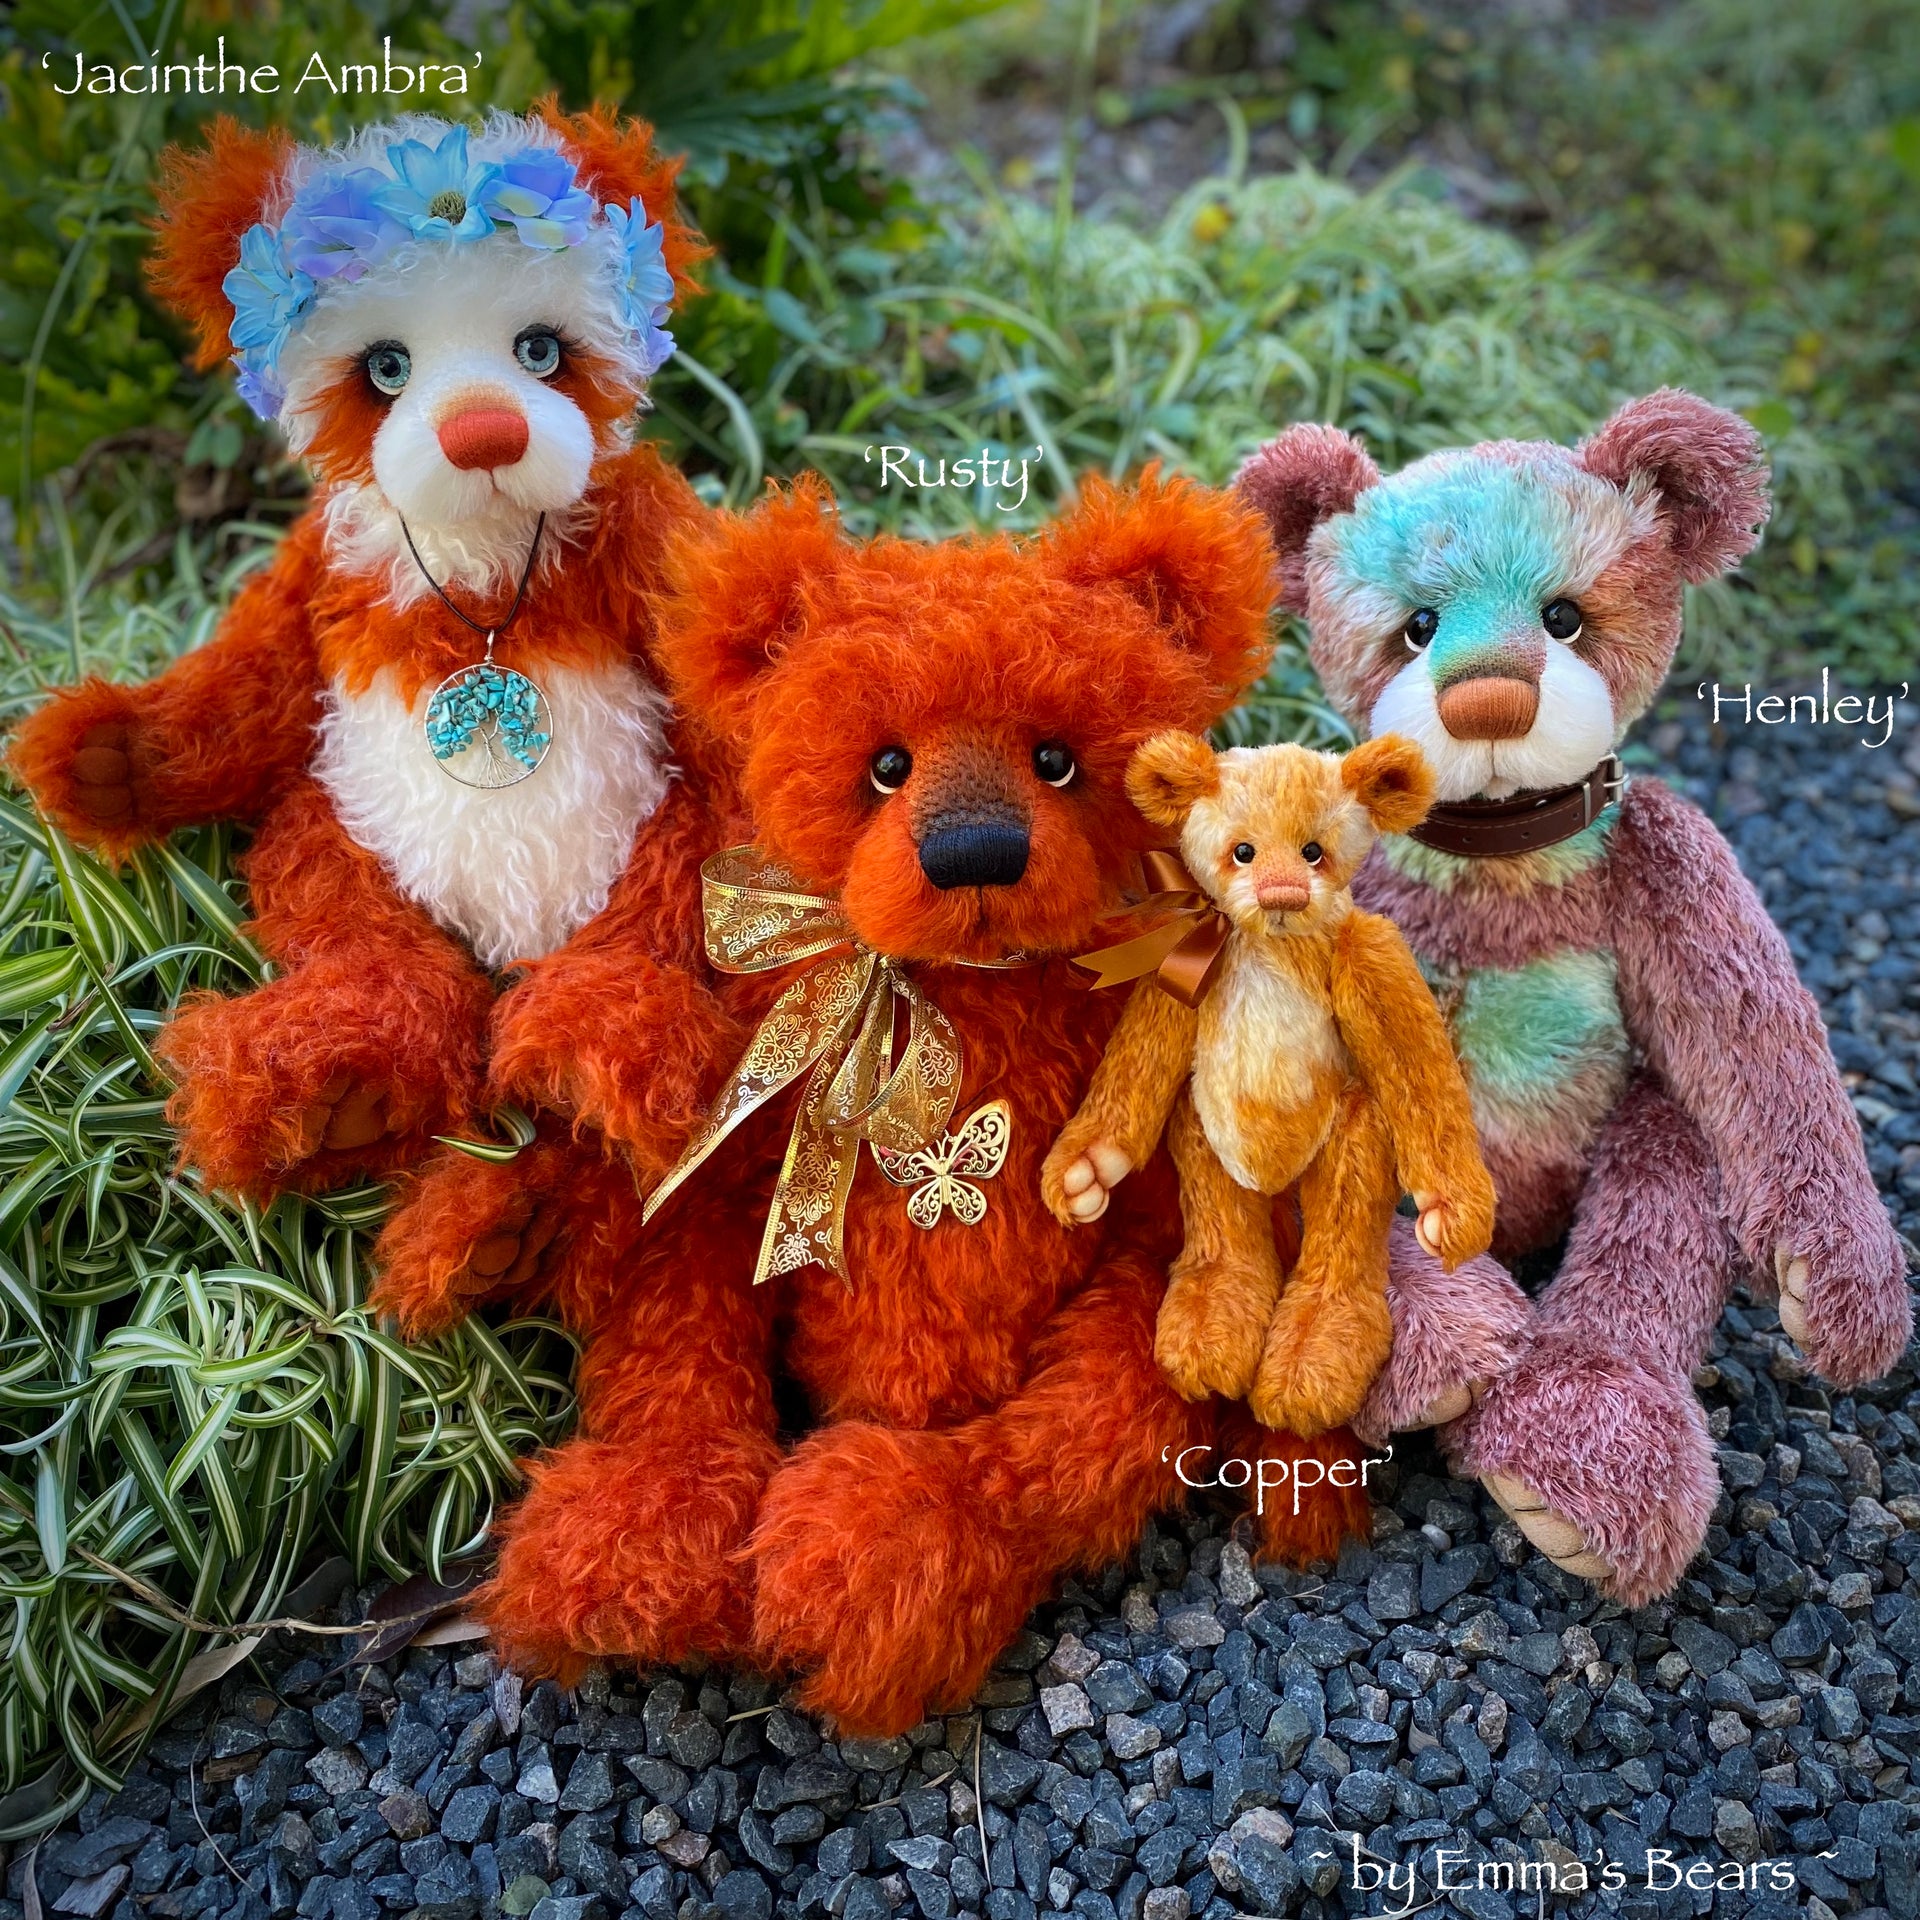 Jacinthe Ambra - 17" Mohair Artist Bear by Emma's Bears - OOAK